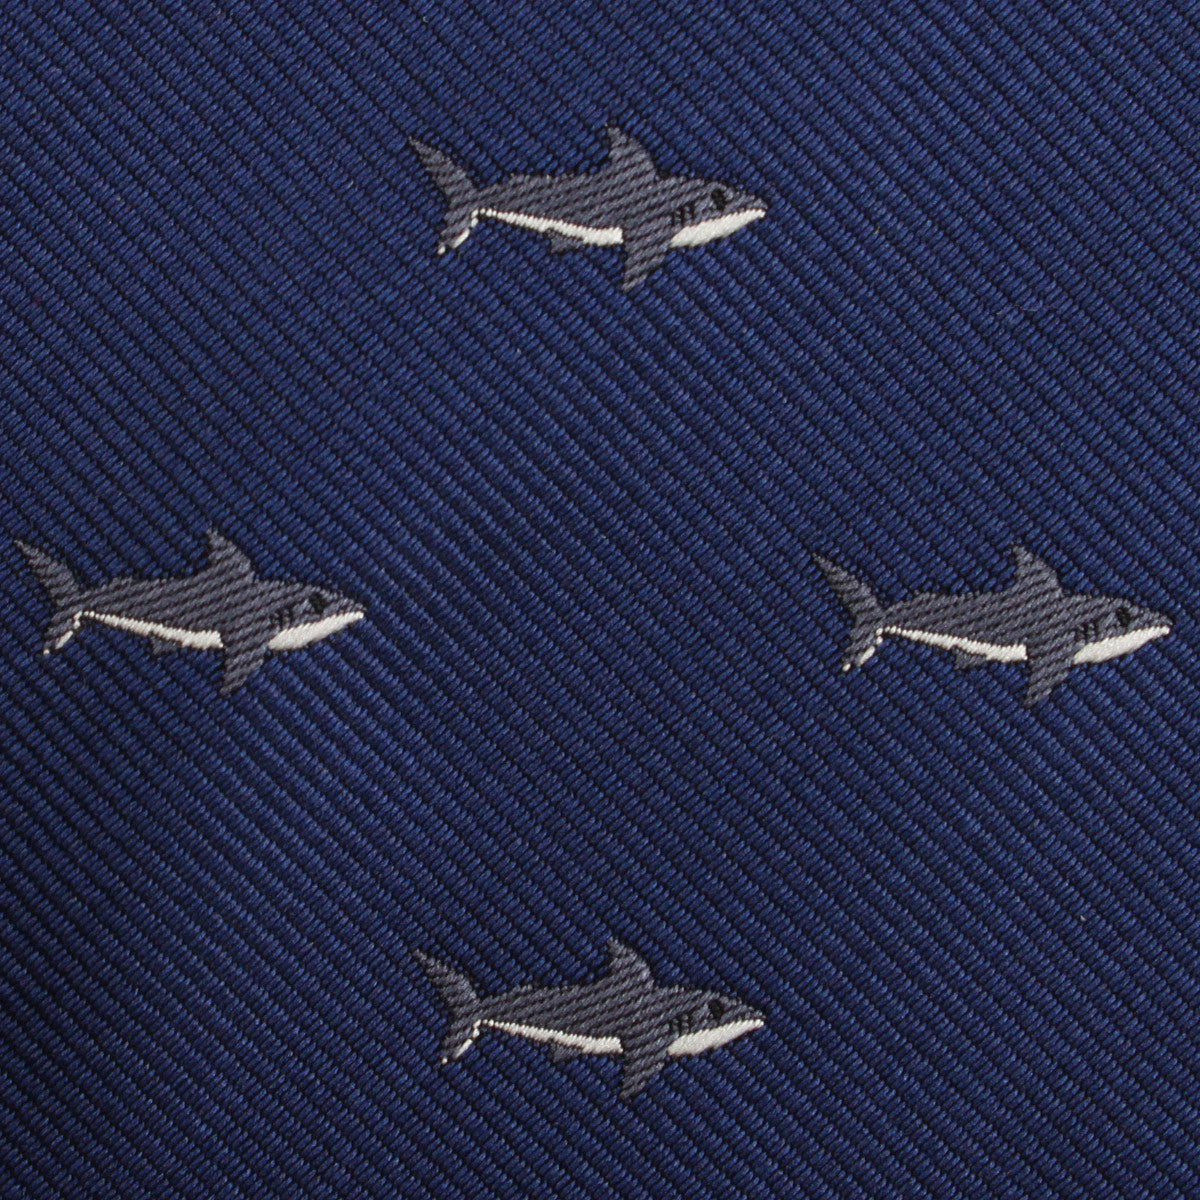 Shark Fabric Self Diamond Bowtie